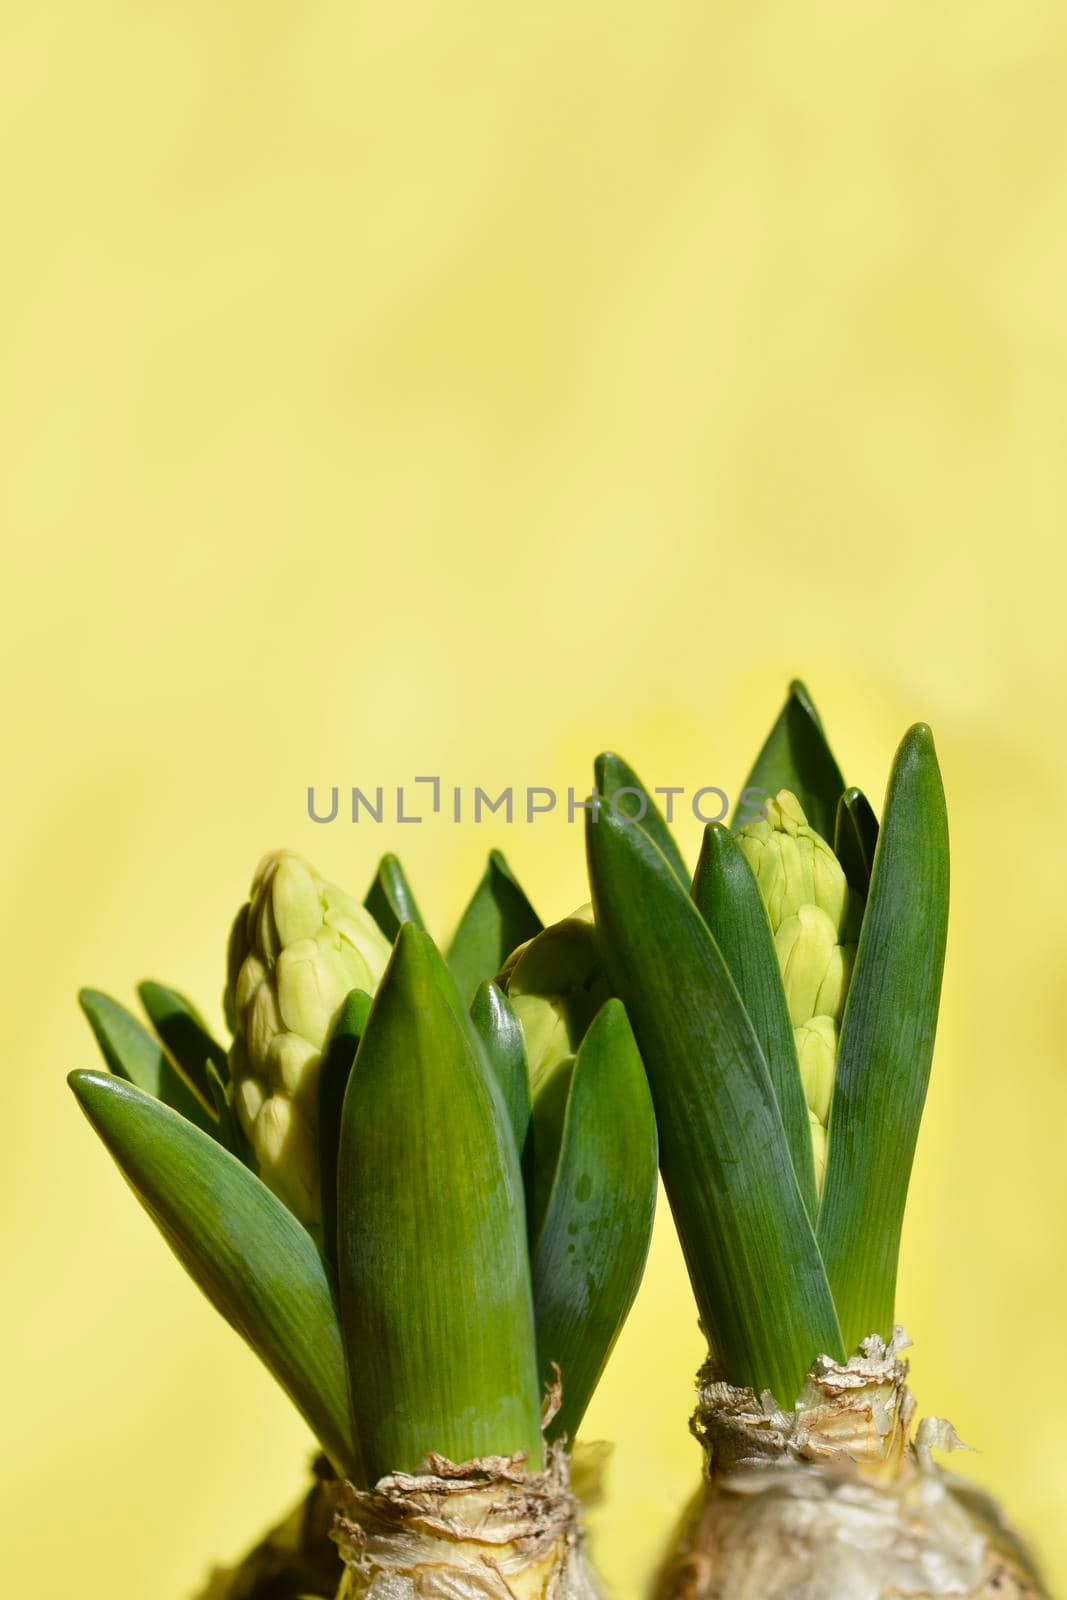 Common hyacinth yellow flower buds - Latin name - Hyacinthus orientalis